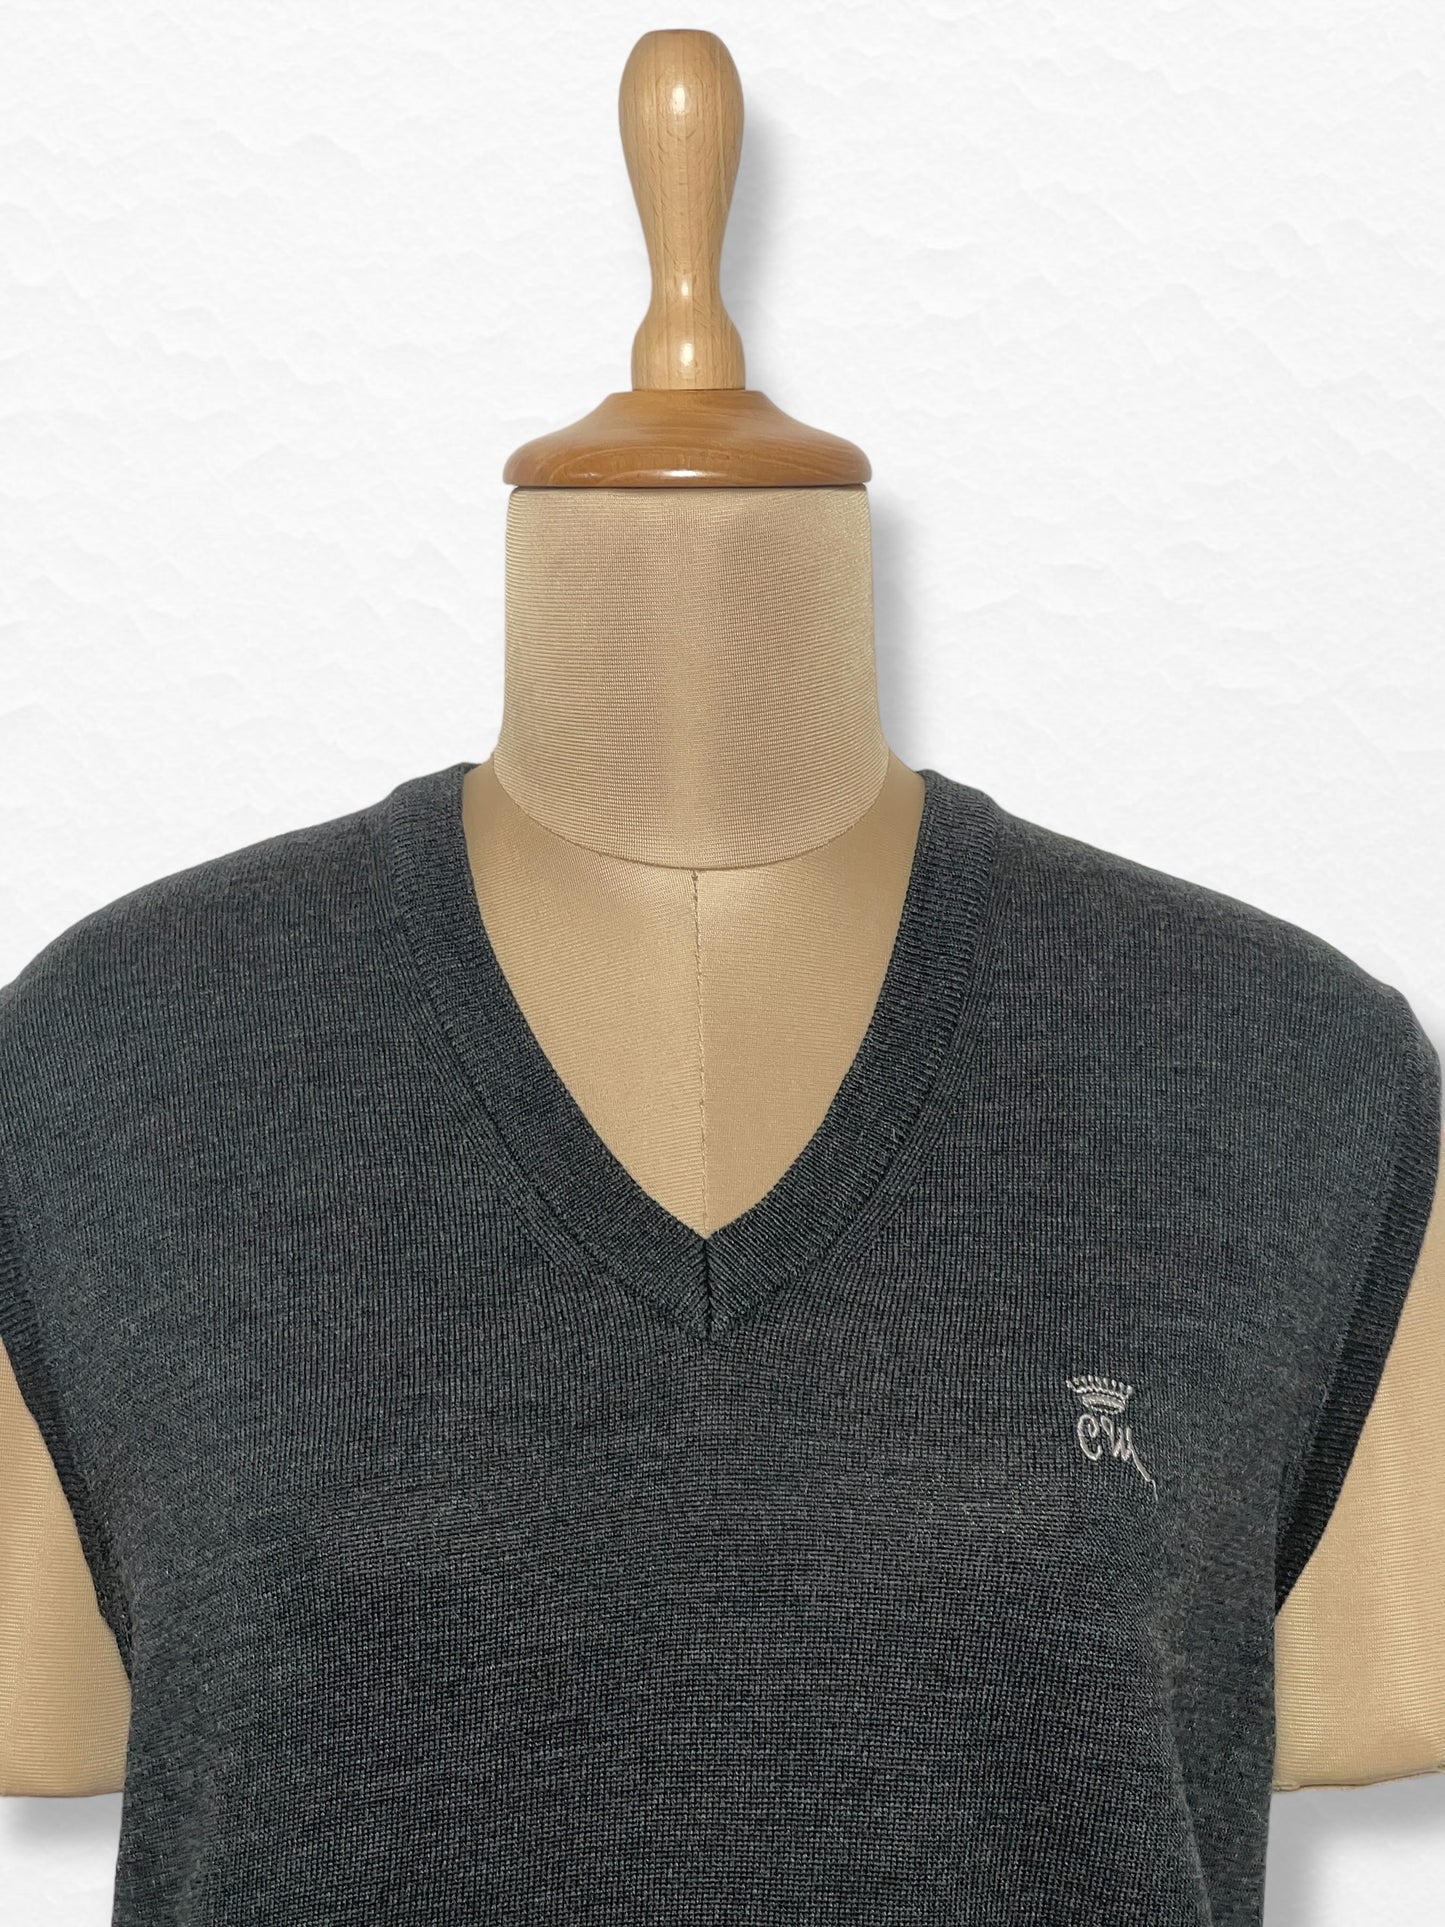 Women's Sweater Vest 2727